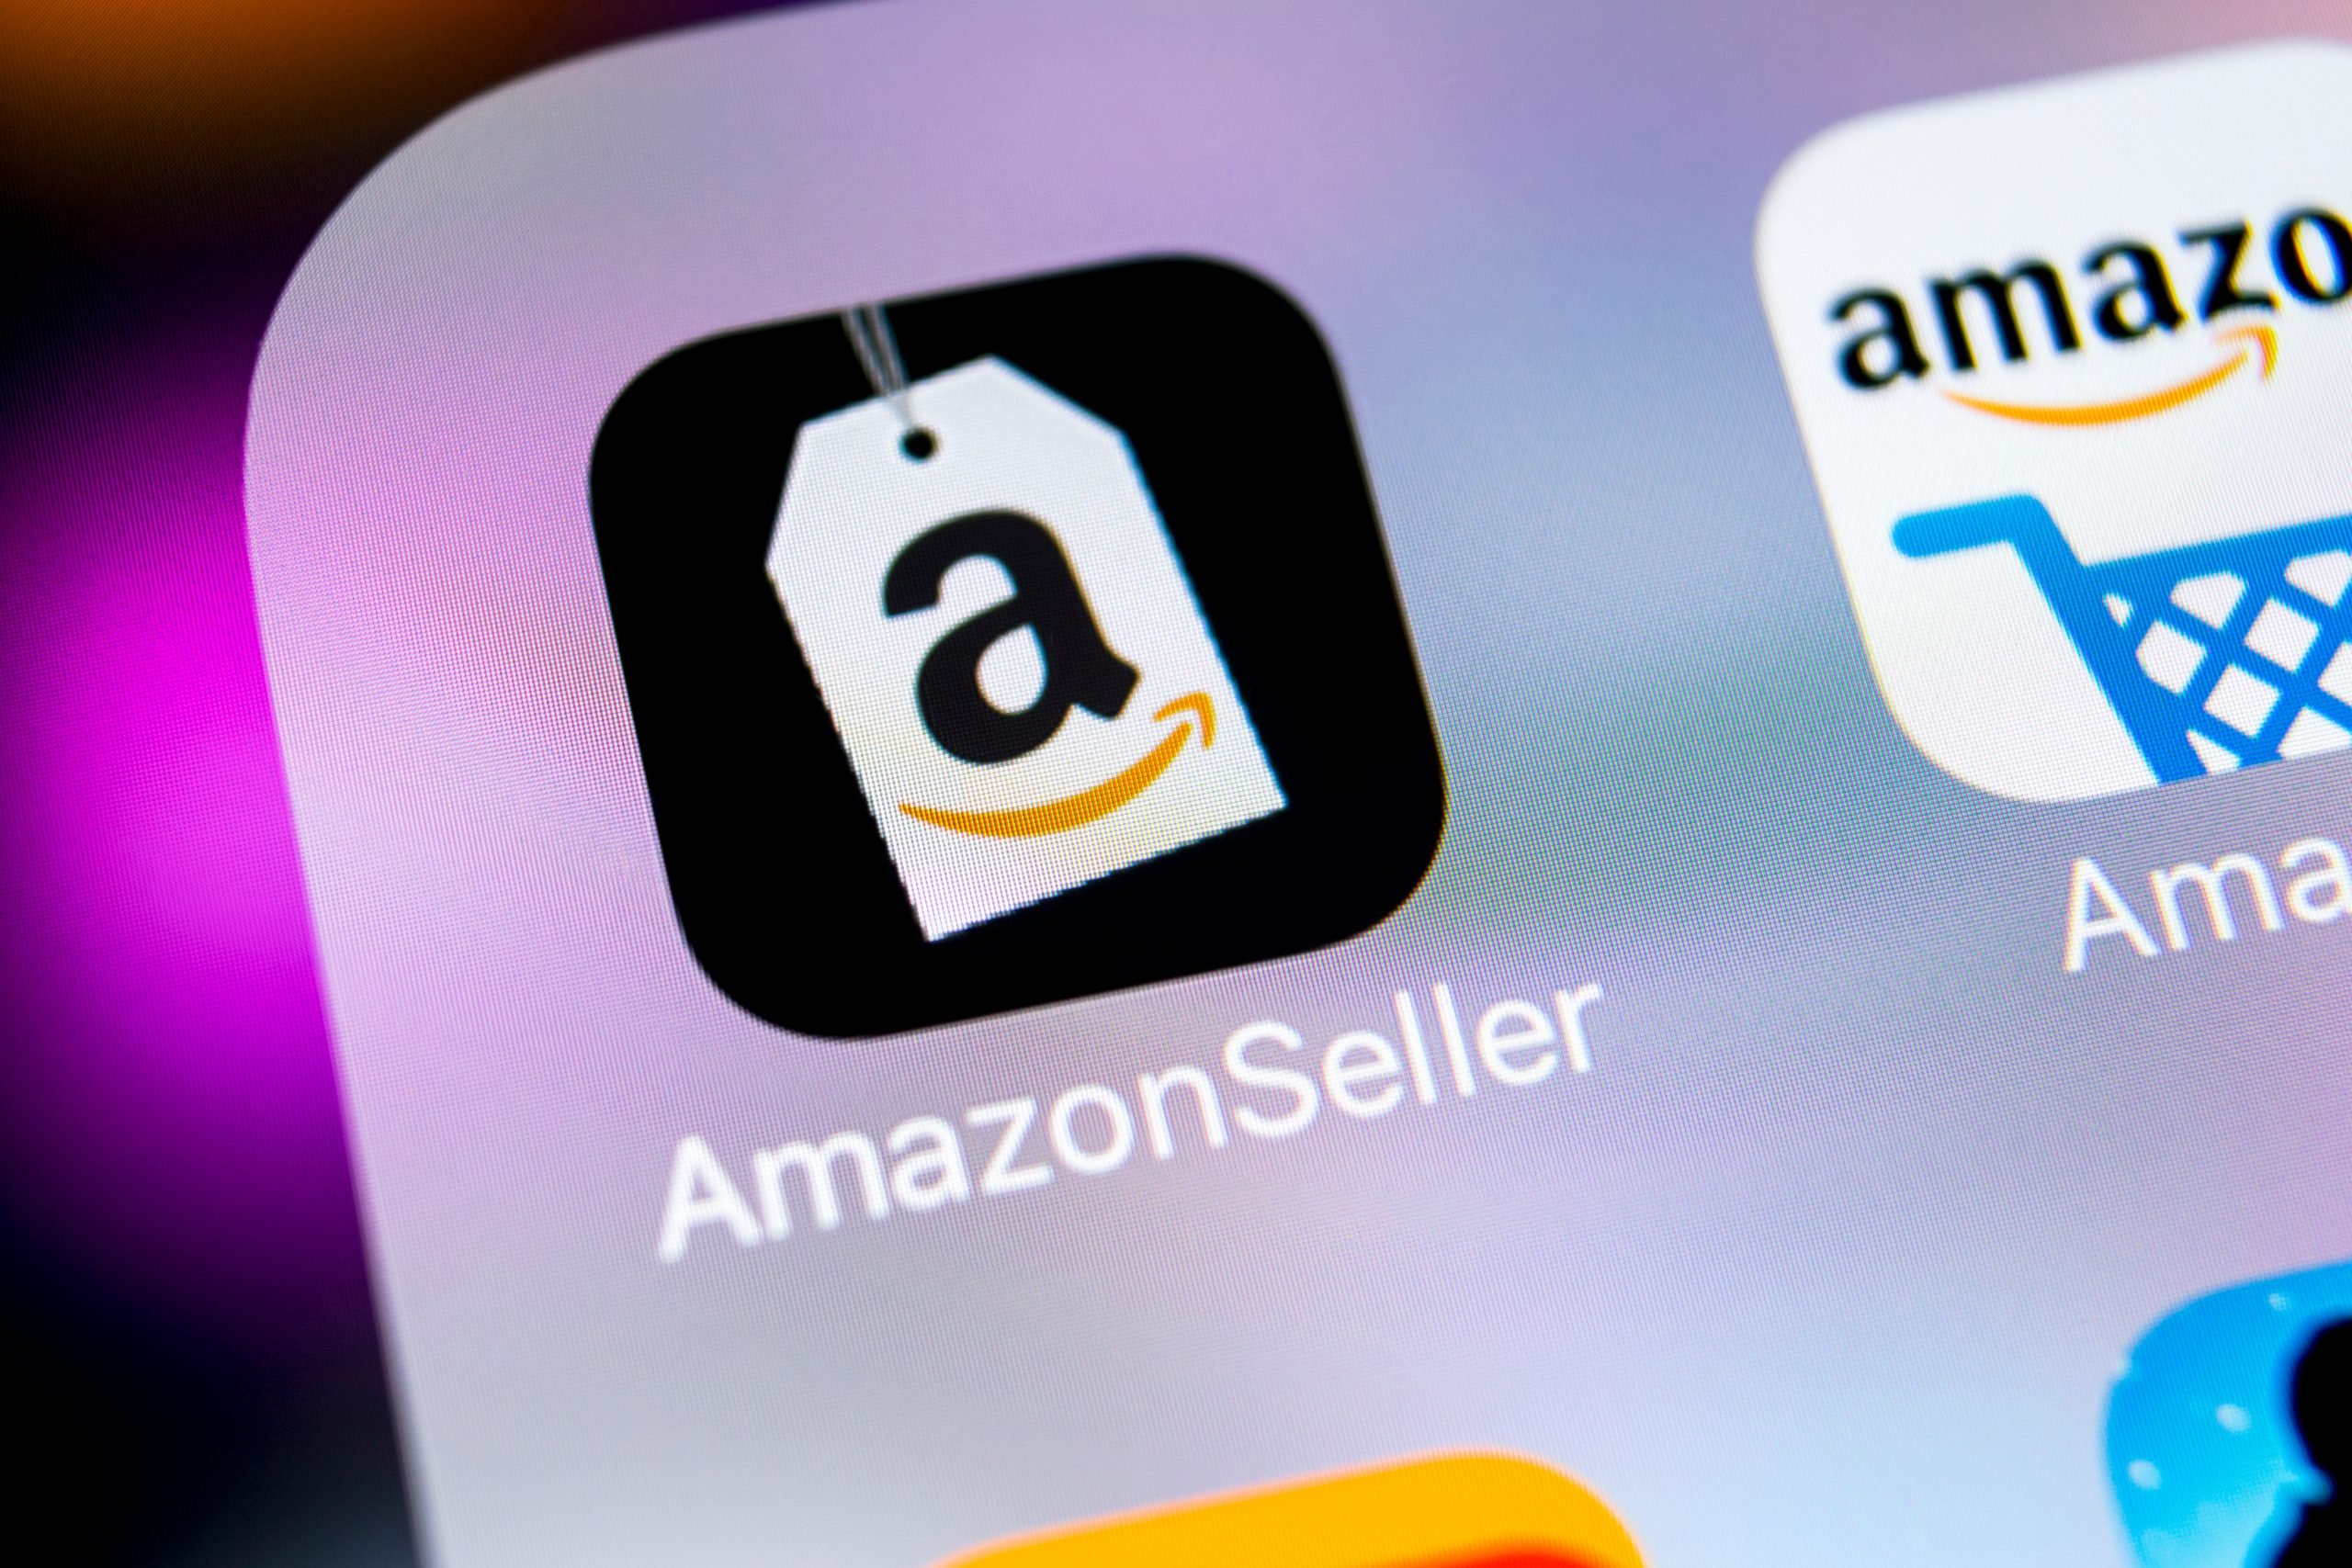 Amazon-seller-scaled